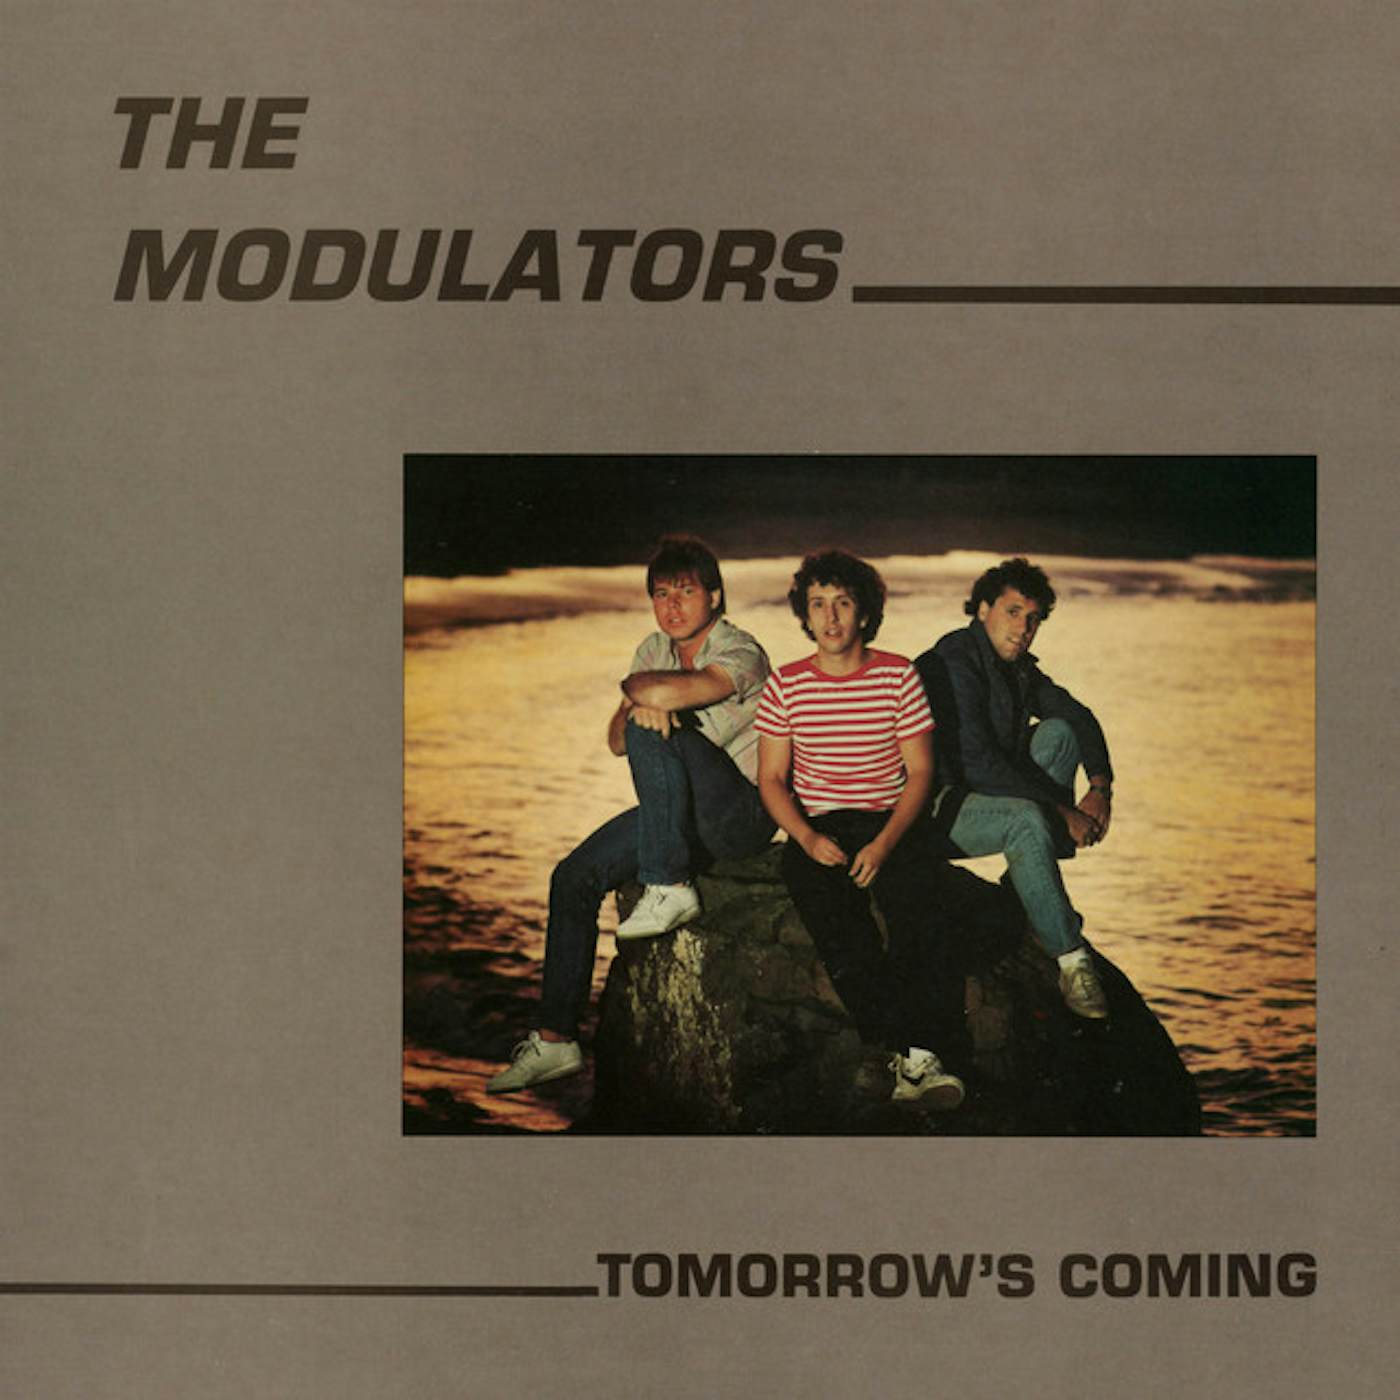 The Modulators Tomorrow's Coming Vinyl Record